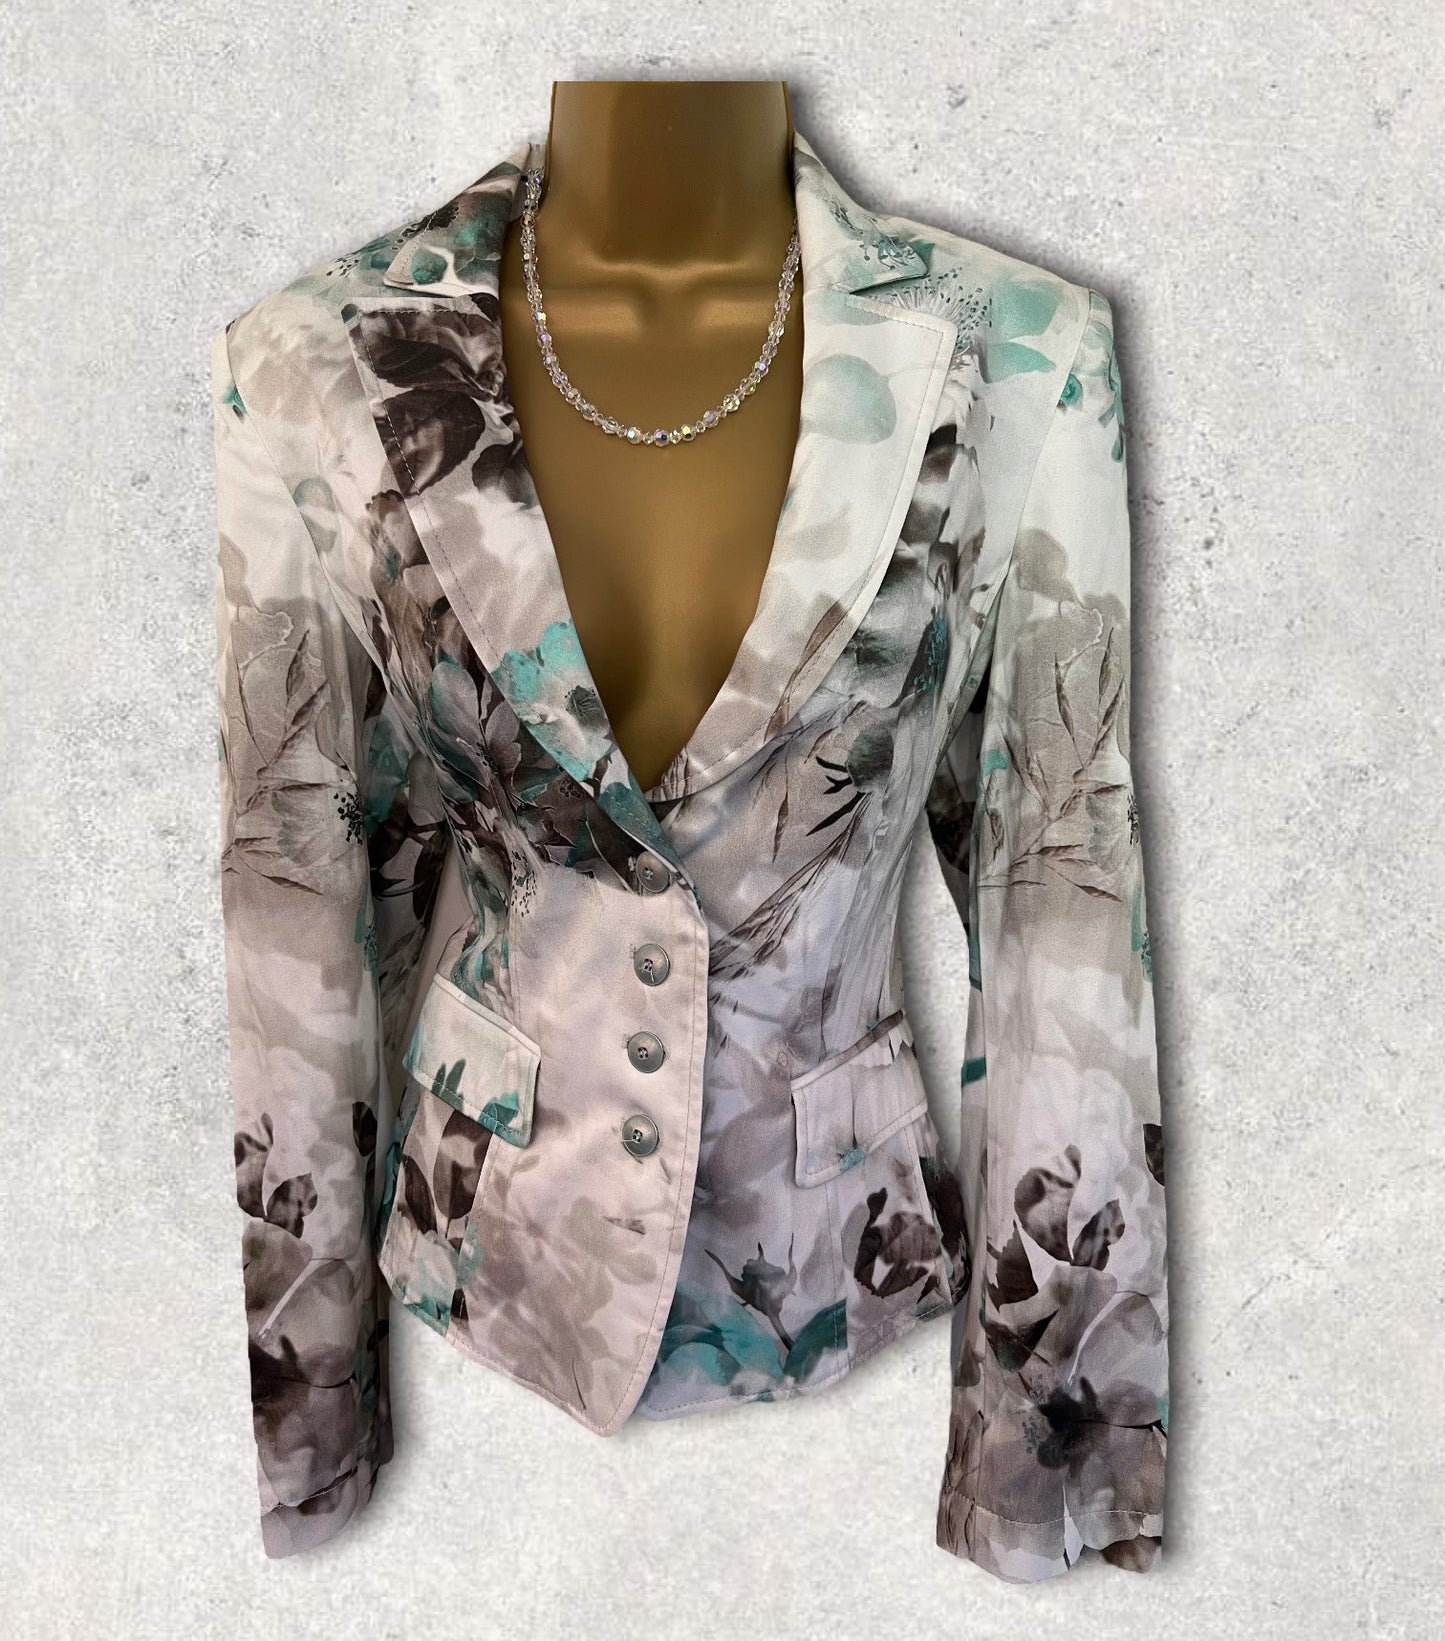 Apanage Womens White, Blue & Grey Floral Jacket BNWT RRP £165 UK 10 US6 EU 38 IT 42 Timeless Fashions